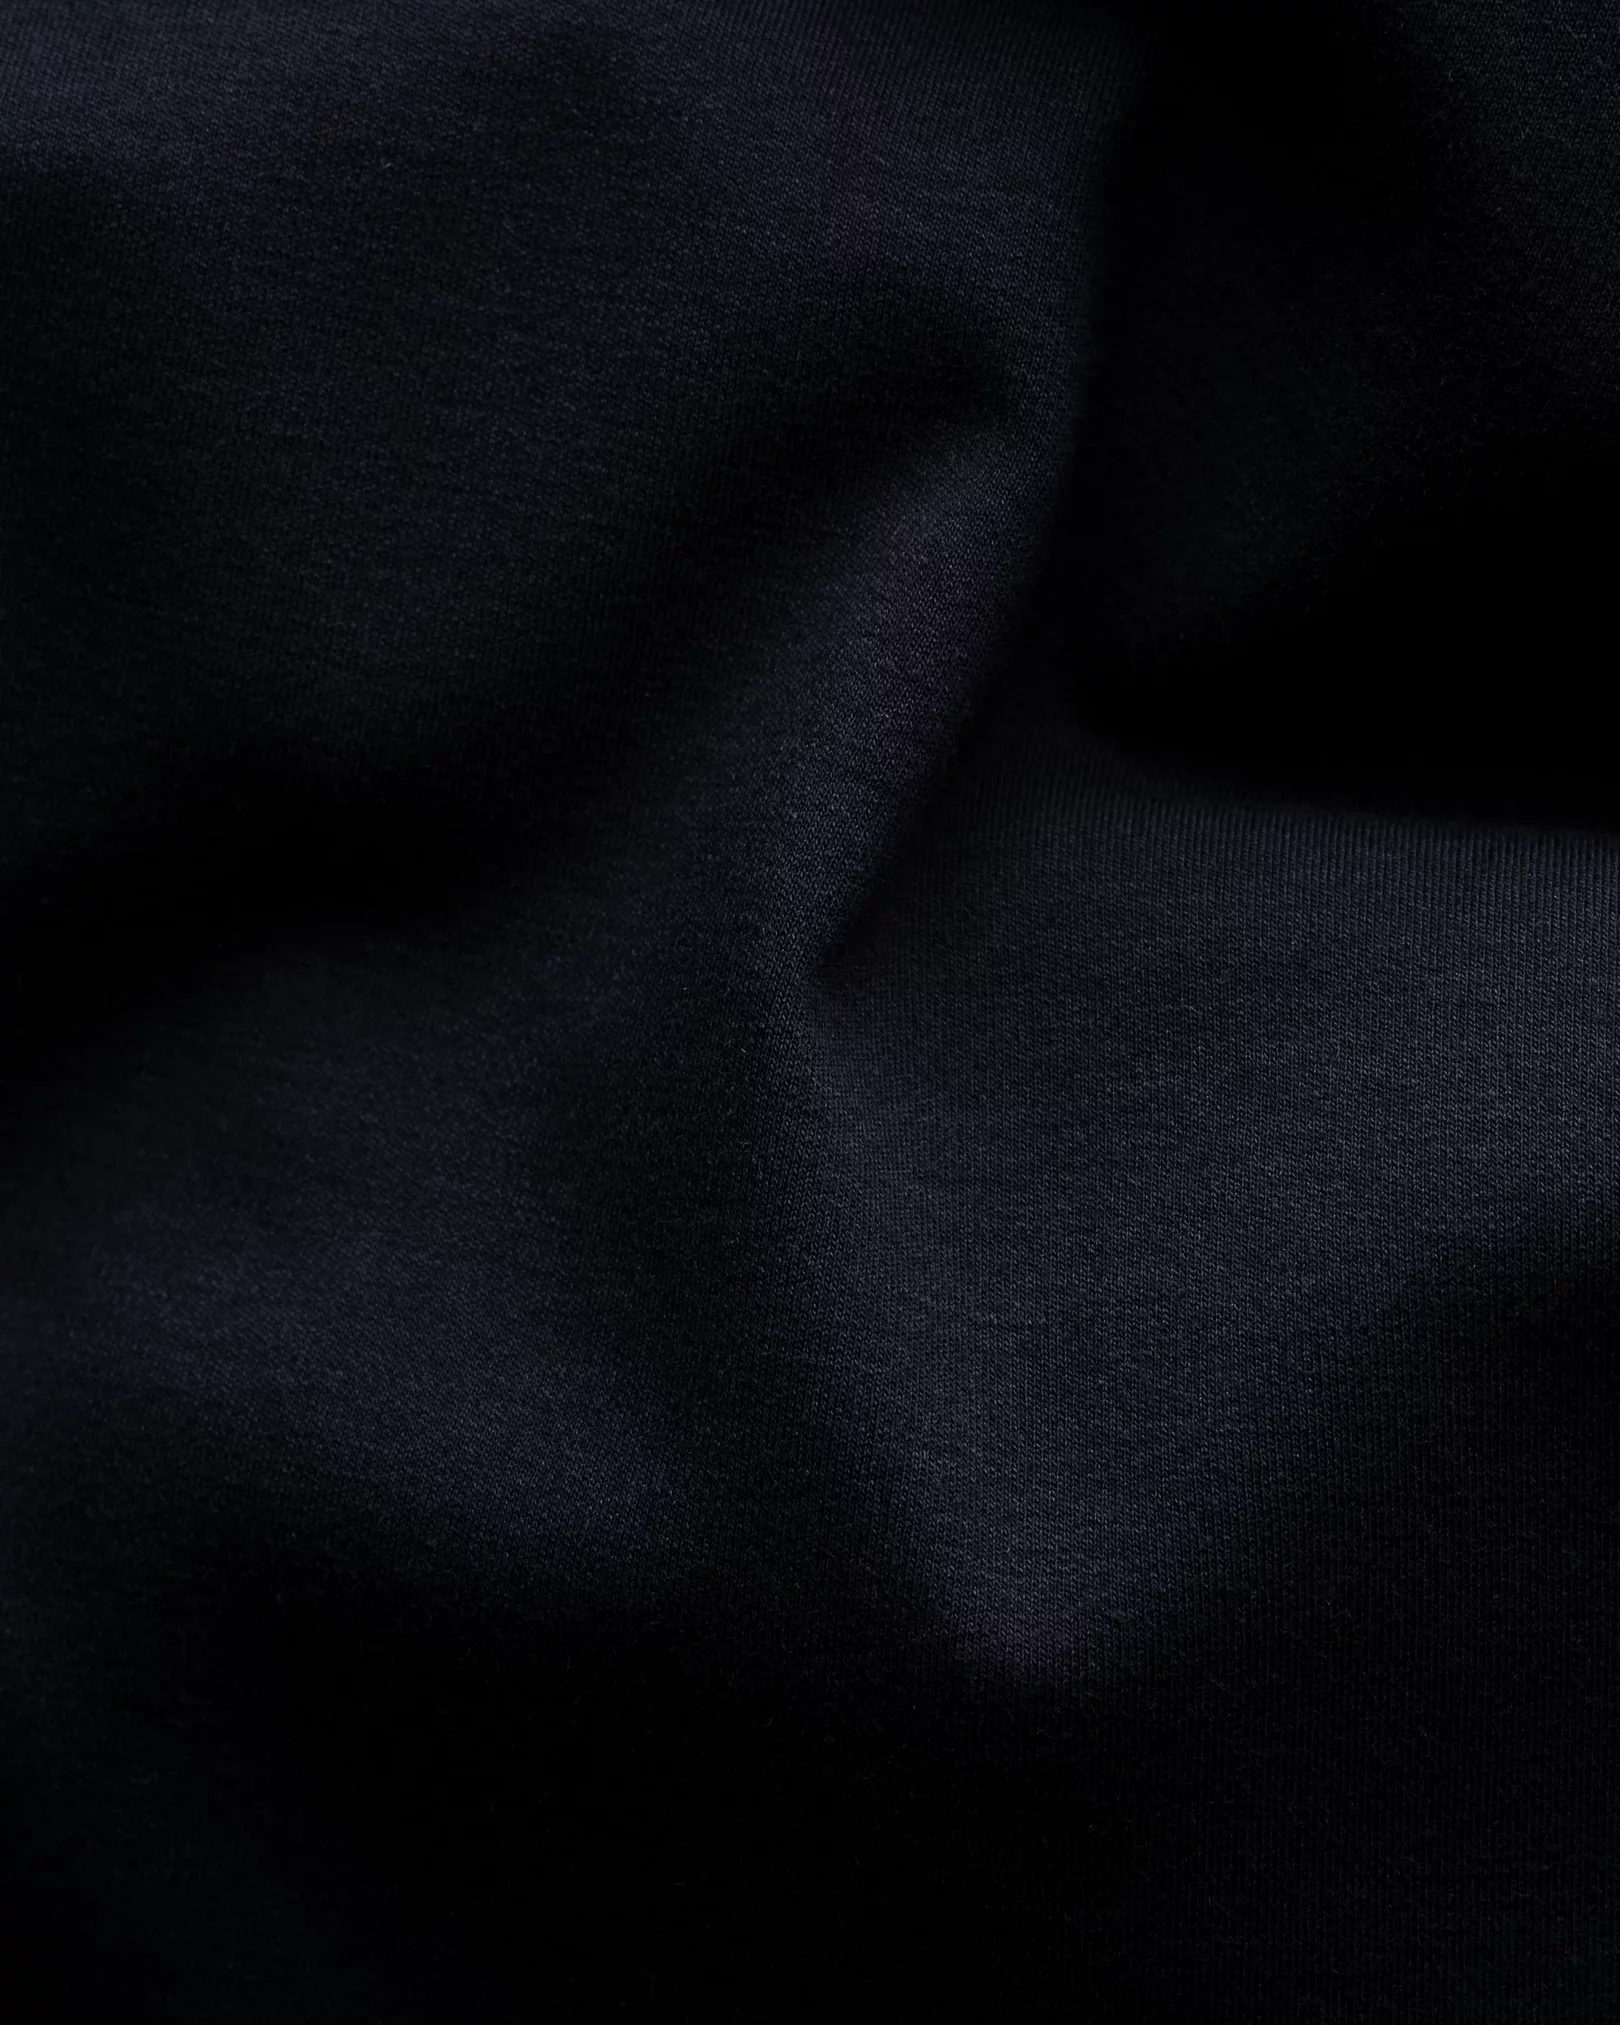 Eton - Navy blue Solid Cotton Four-Way Stretch Shirt